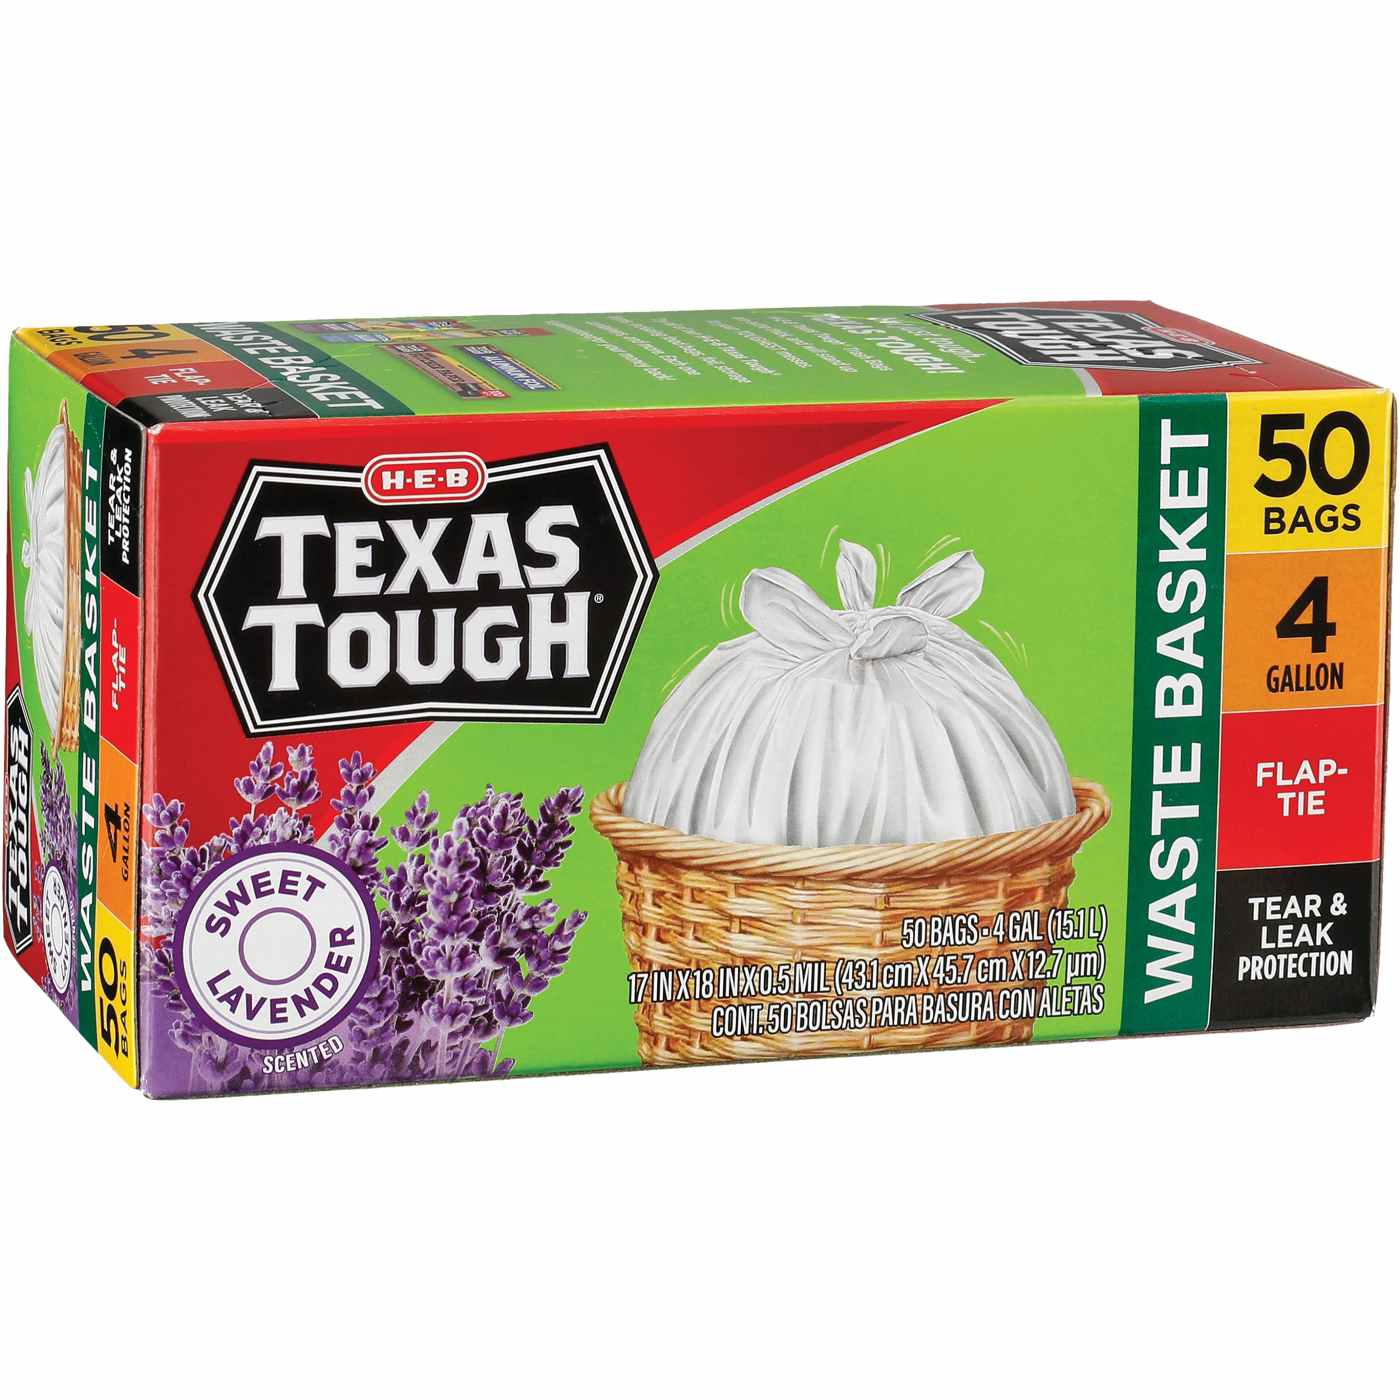 HEB Texas Tough Flap Tie Waste Basket Trash Bags, 4 Gallon Sweet